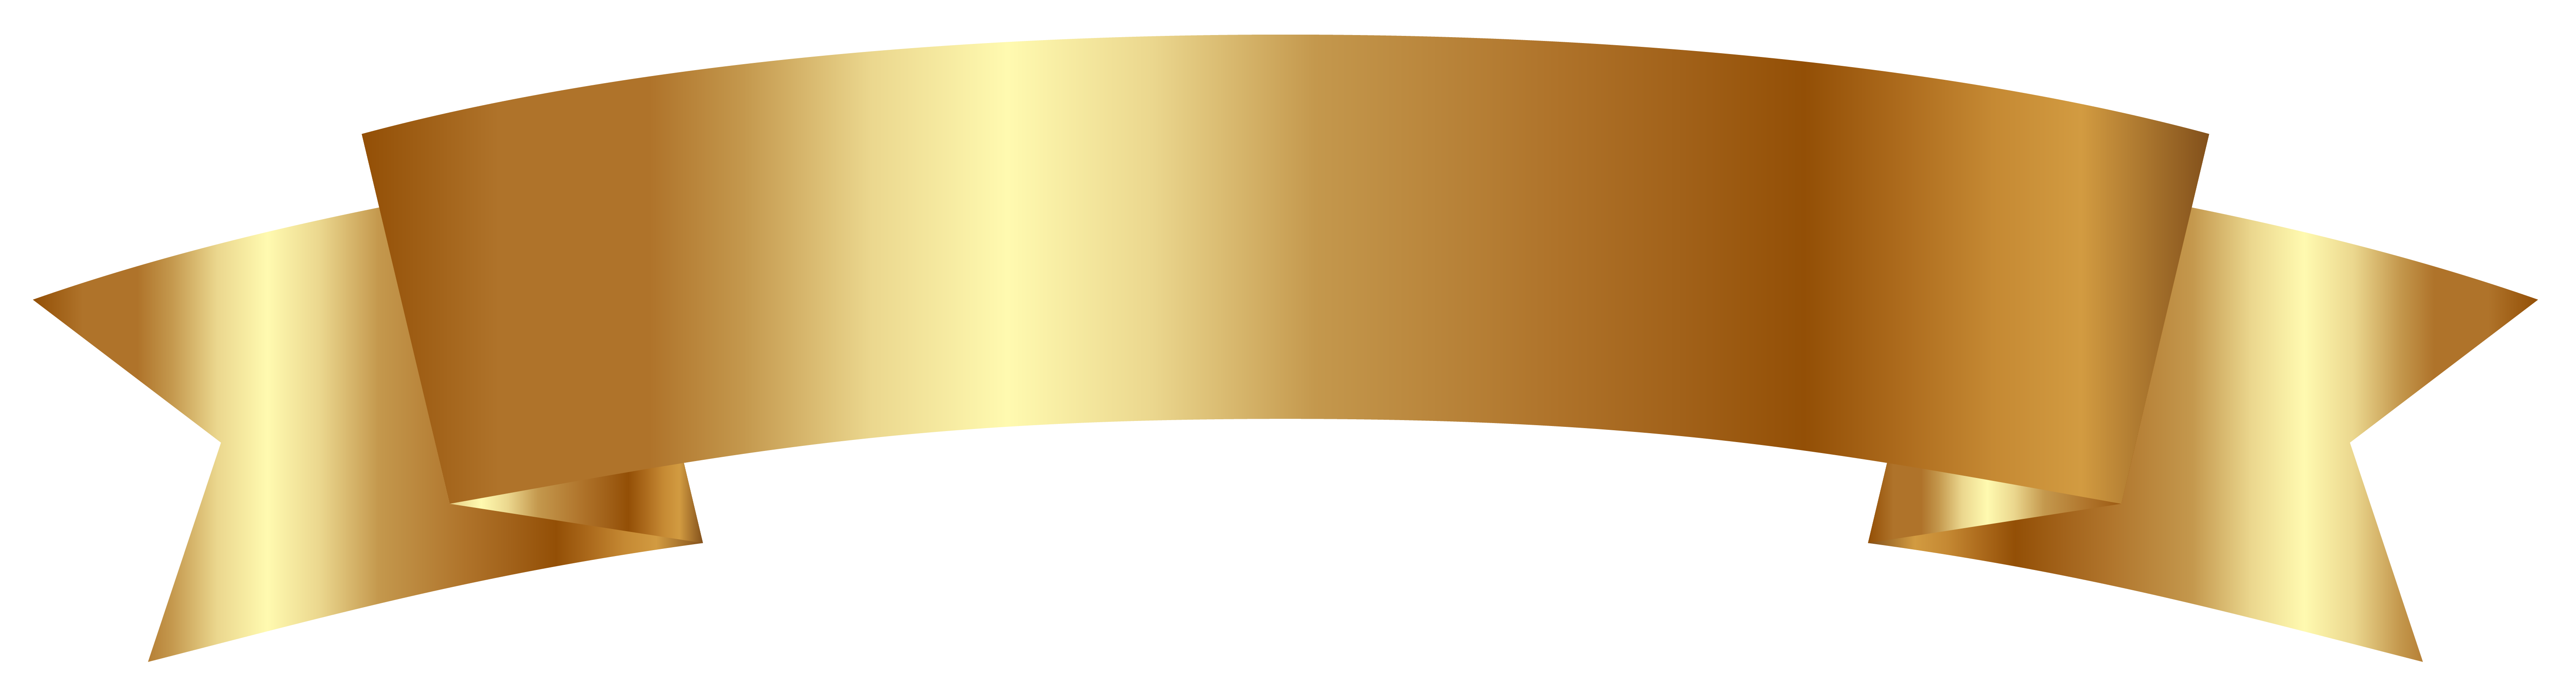 Золотая лента на прозрачном фоне